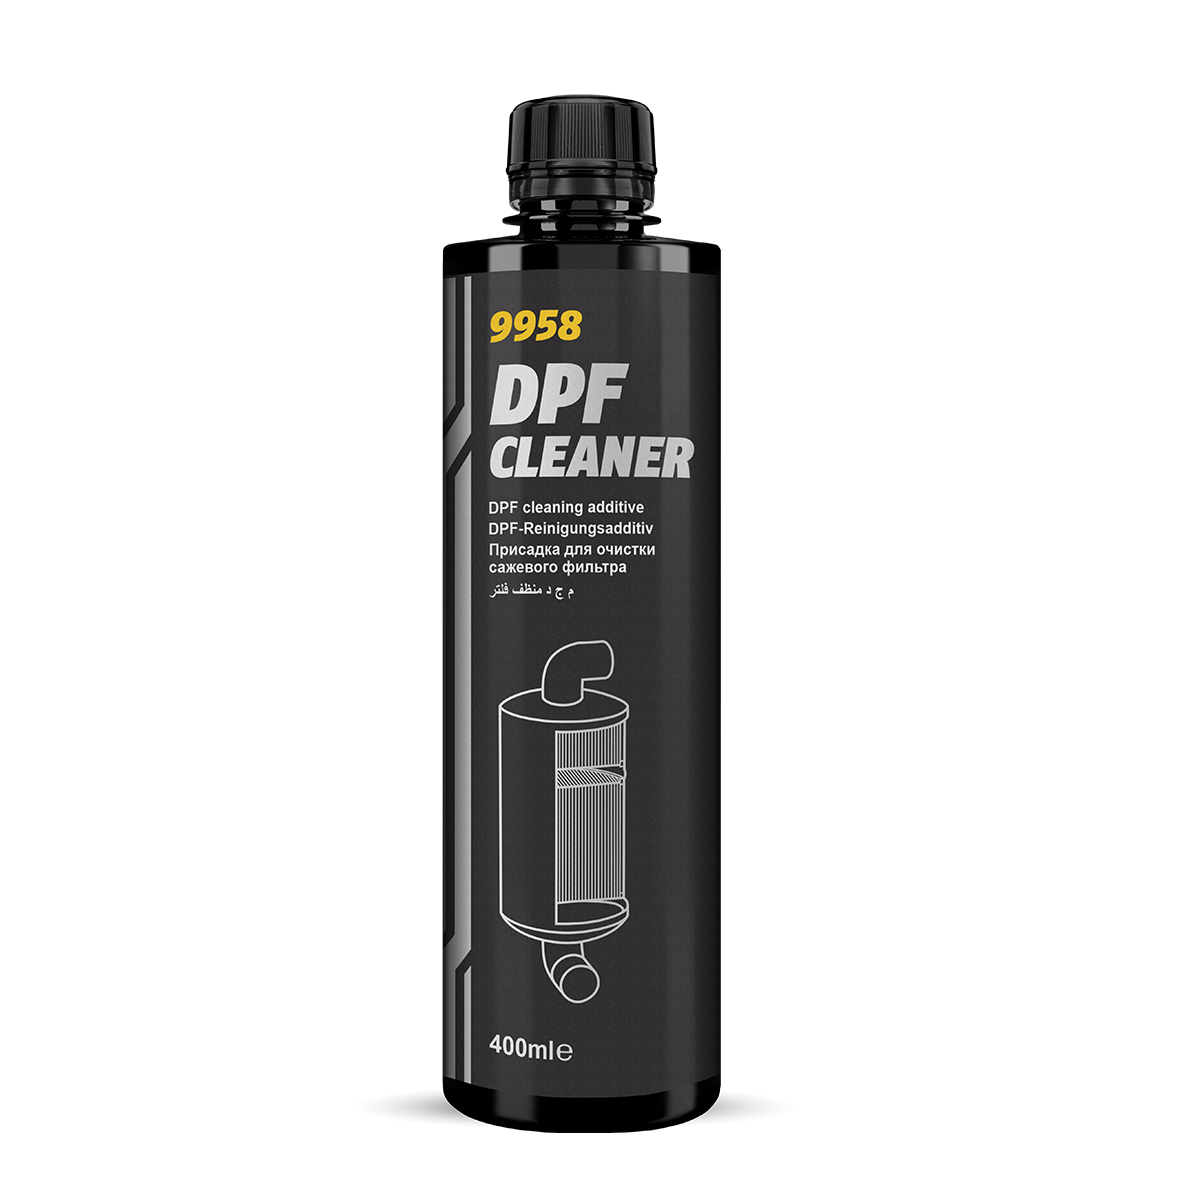 DPF Cleaner 400ml PET - 9958 - € 7,95